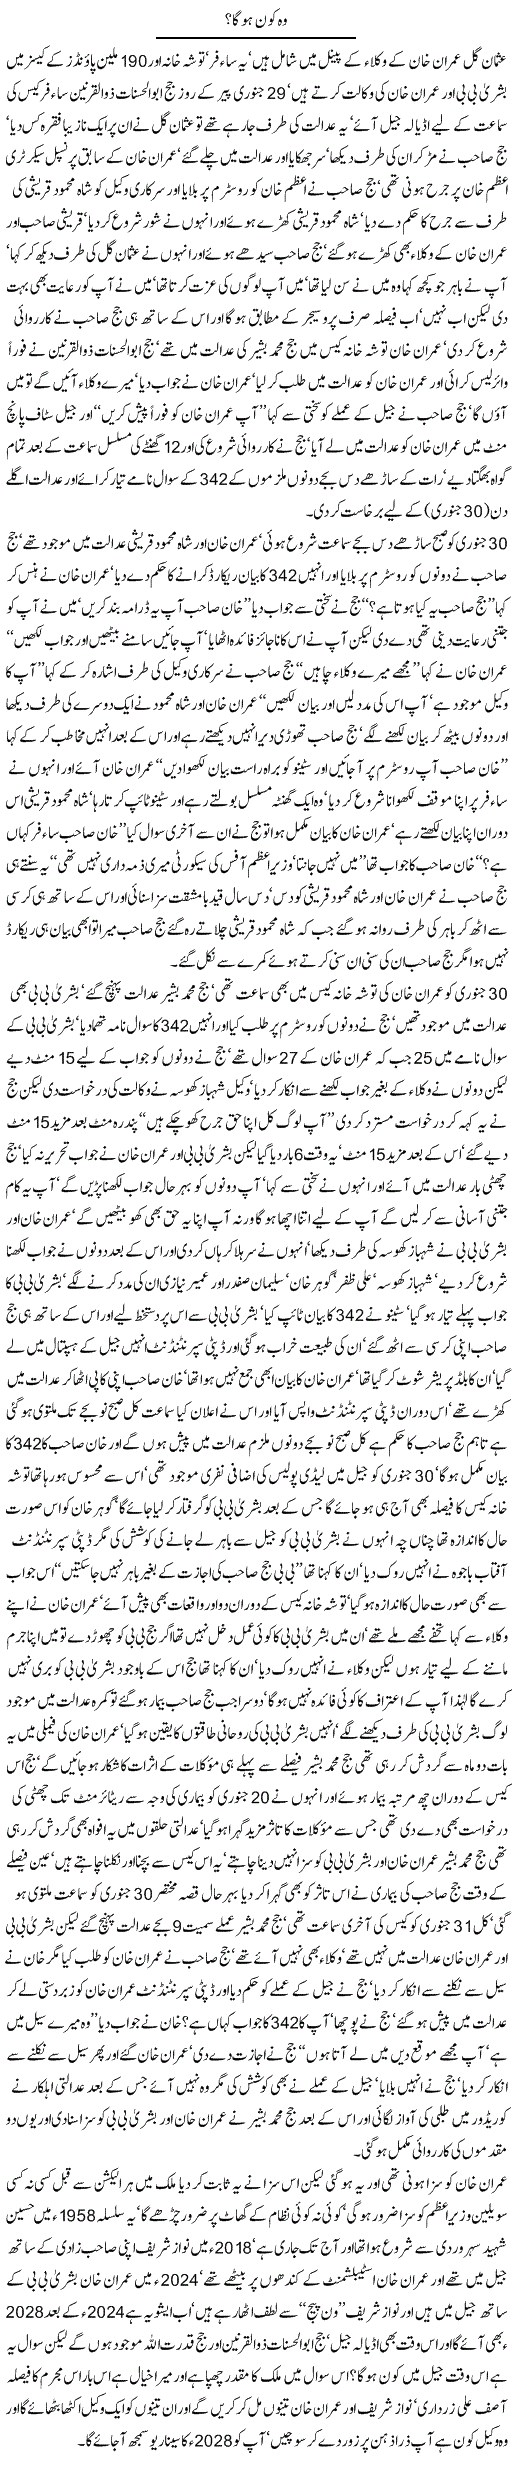 Javed Chaudhry Column About Imran Khan Cipher Tosha Khana & 190 Million Pounds NAB Case